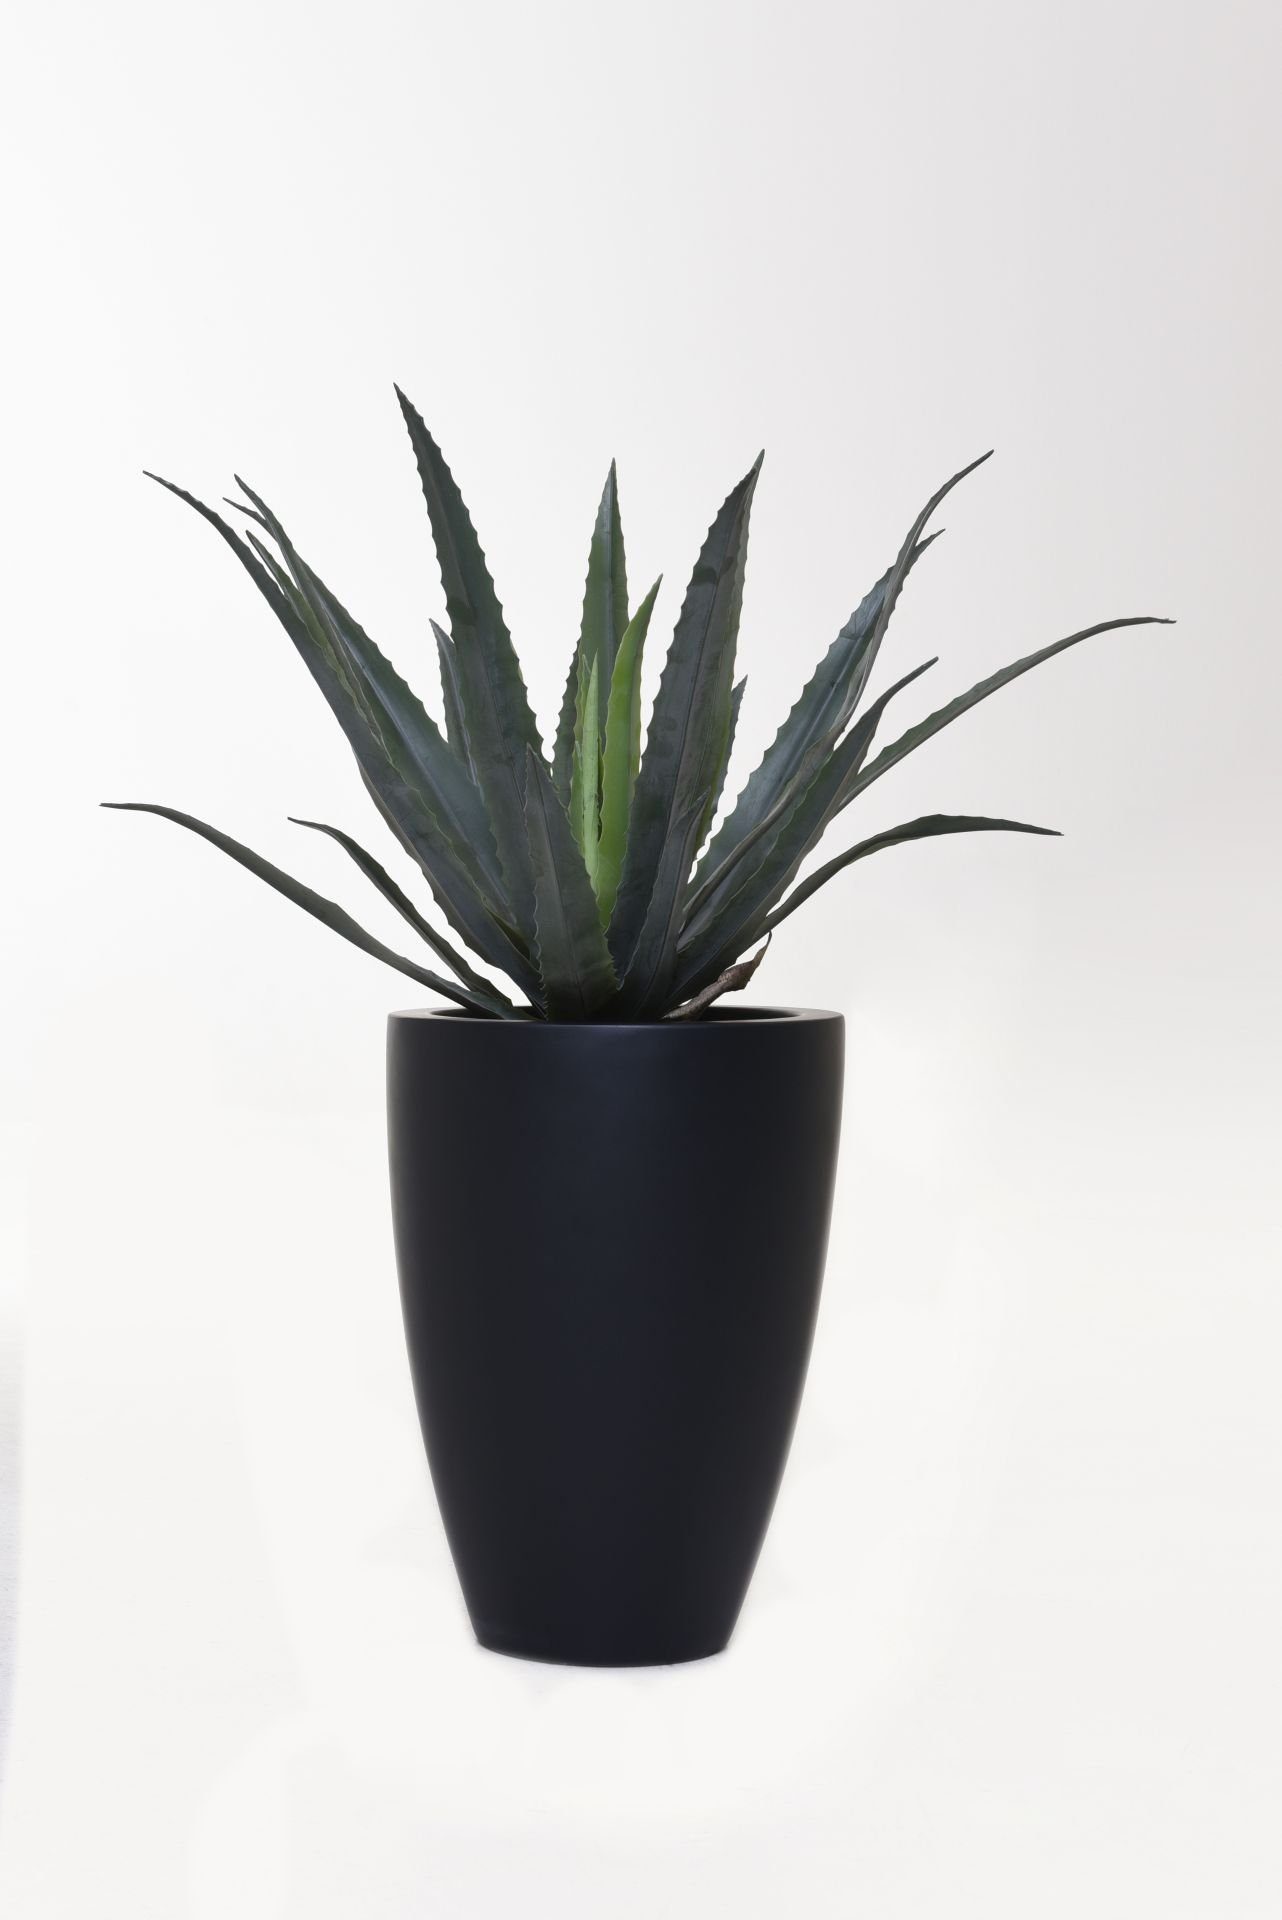 Kunstpflanze Kunstpflanze 67 cm cm, VIVANNO, künstliche Höhe Topf AGAVO 65x67 - Kunststoff Agave im